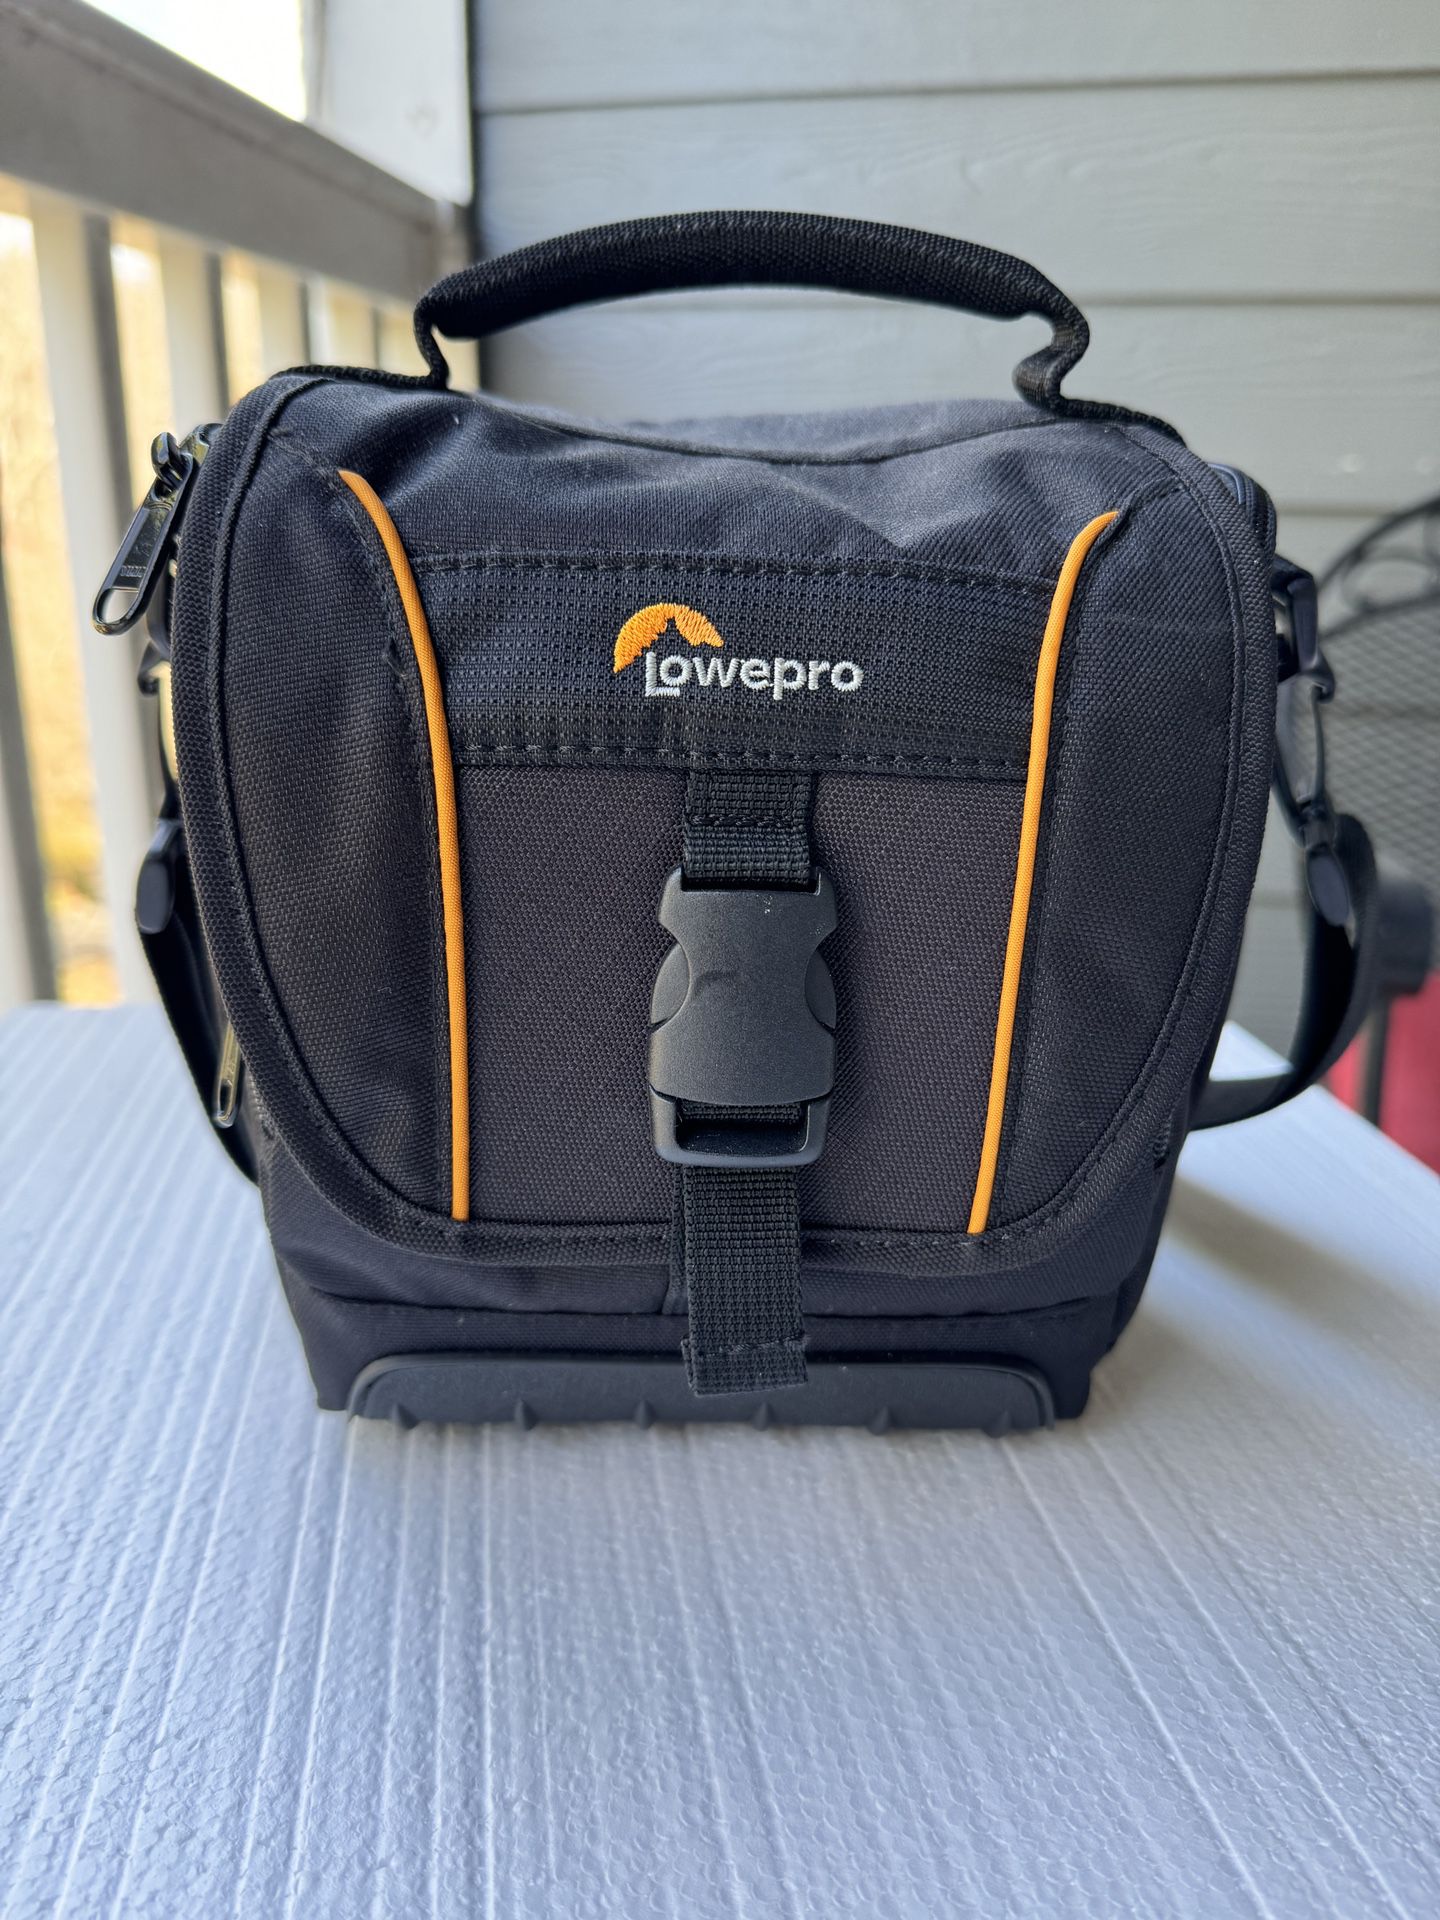 Lowepro Camera Bag With Removable Shoulderstrap